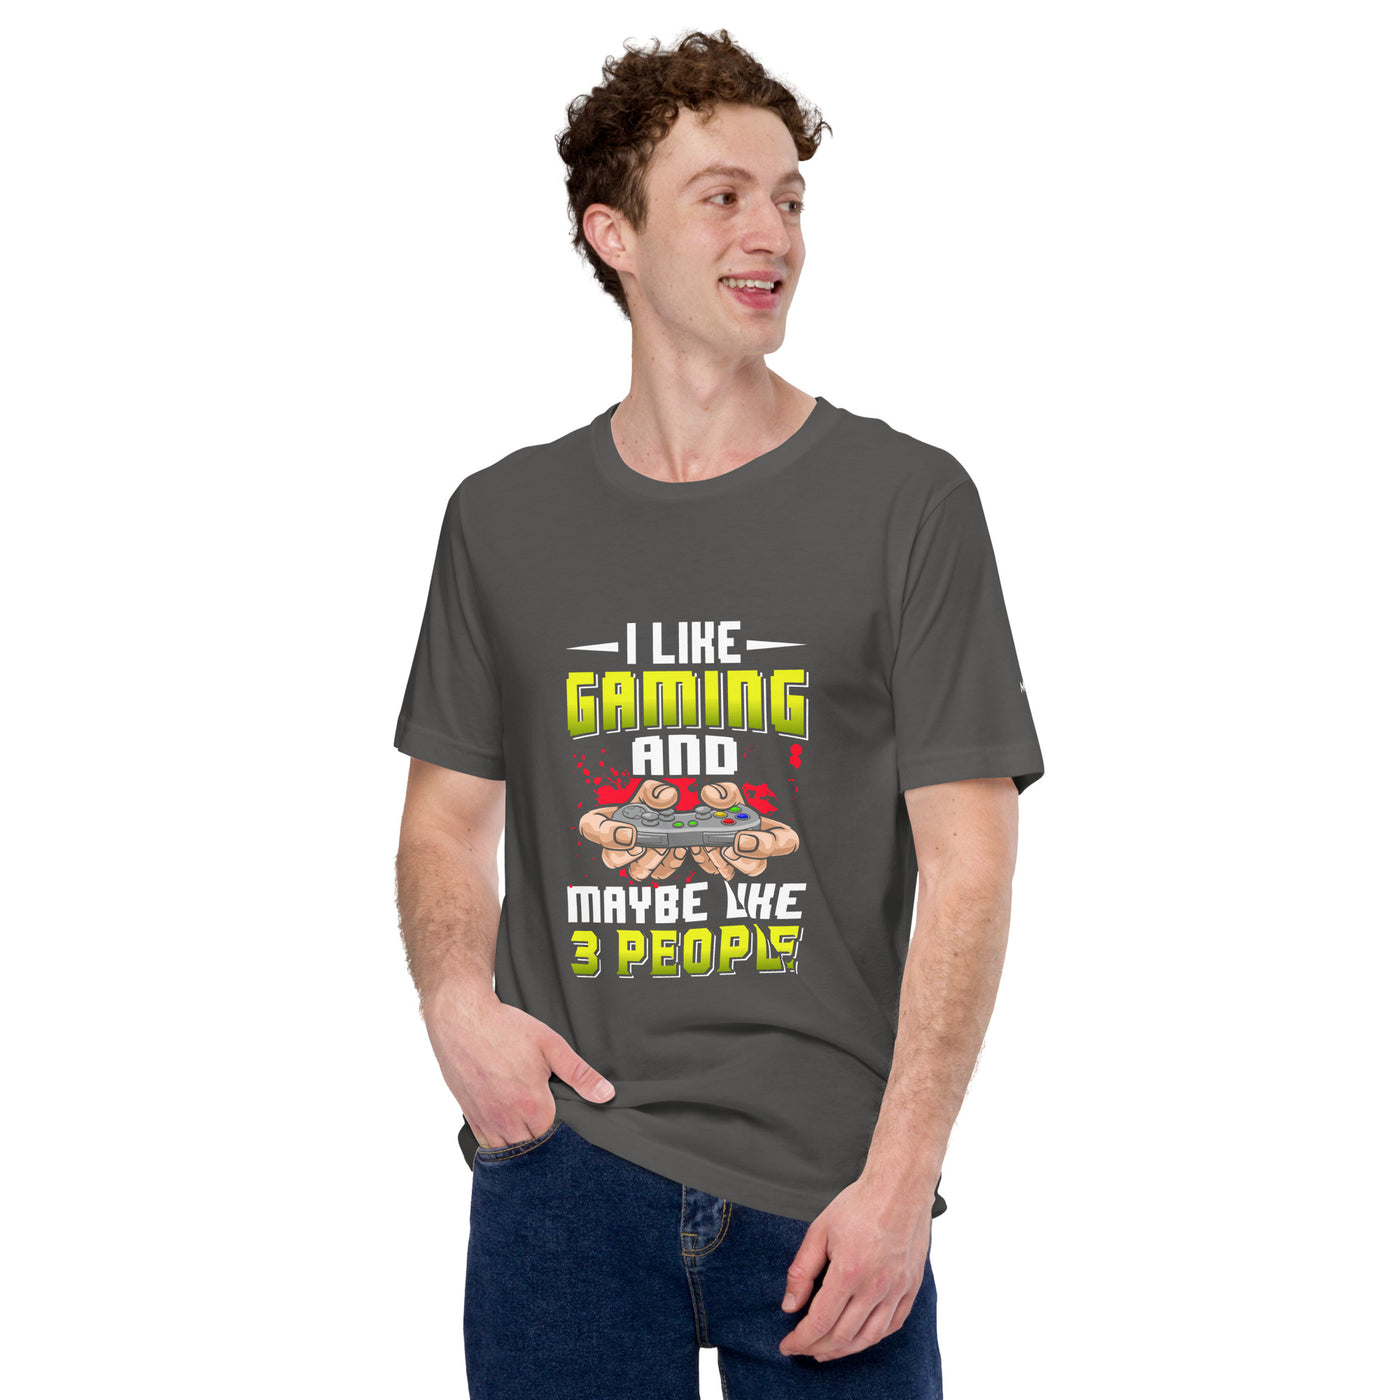 I Like Gaming and Maybe Like 3 People - Unisex t-shirt